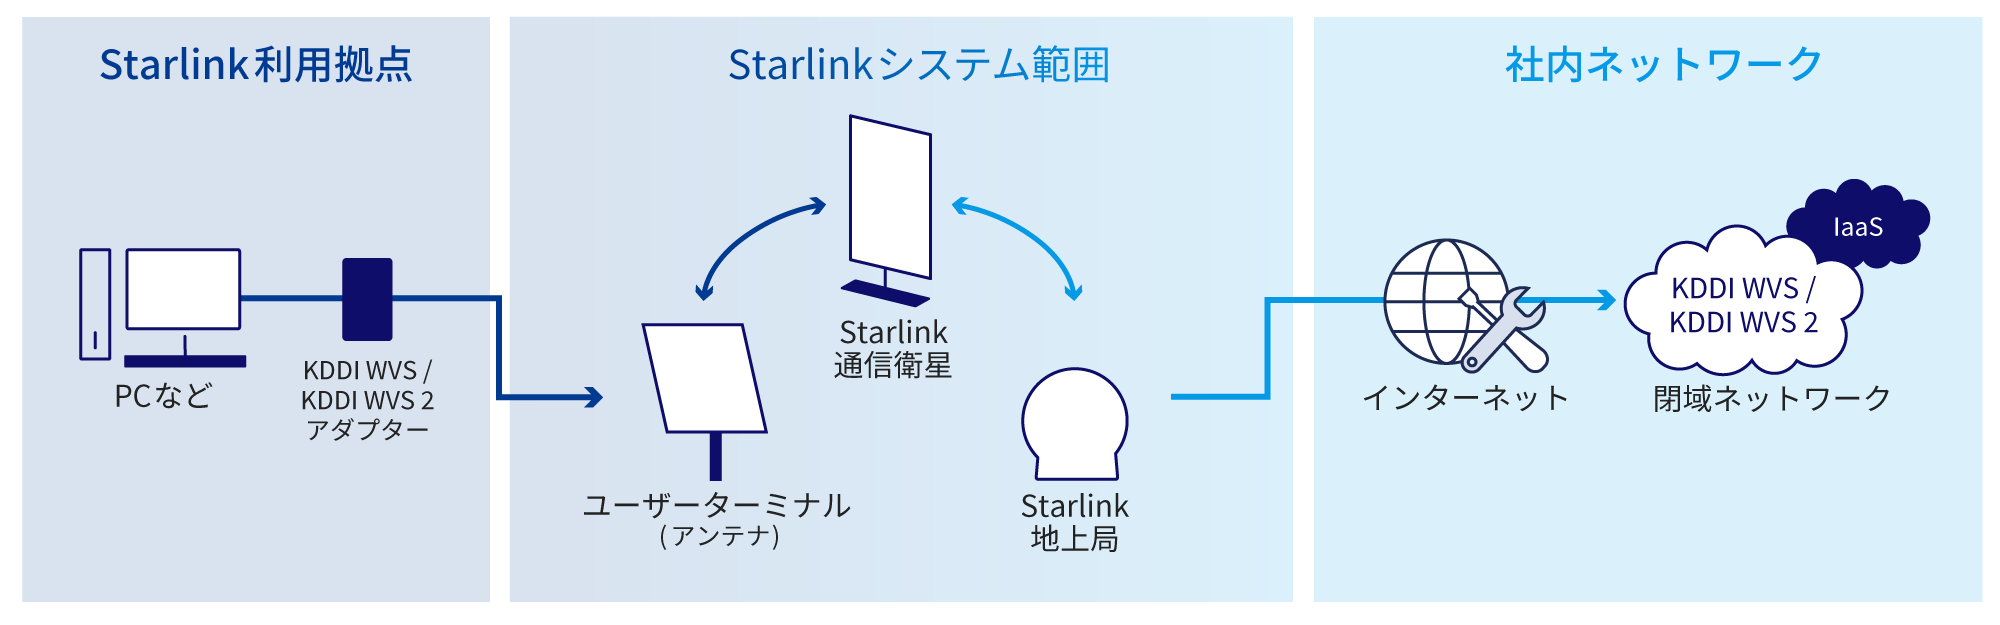 Starlink利用拠点（PCなど→KDDI WVS/KDDI WVS 2アダプター）→Starlinkシステム範囲（ユーザーターミナル(アンテナ)↔Starlink通信衛星↔Starlink地上局）→社内ネットワーク